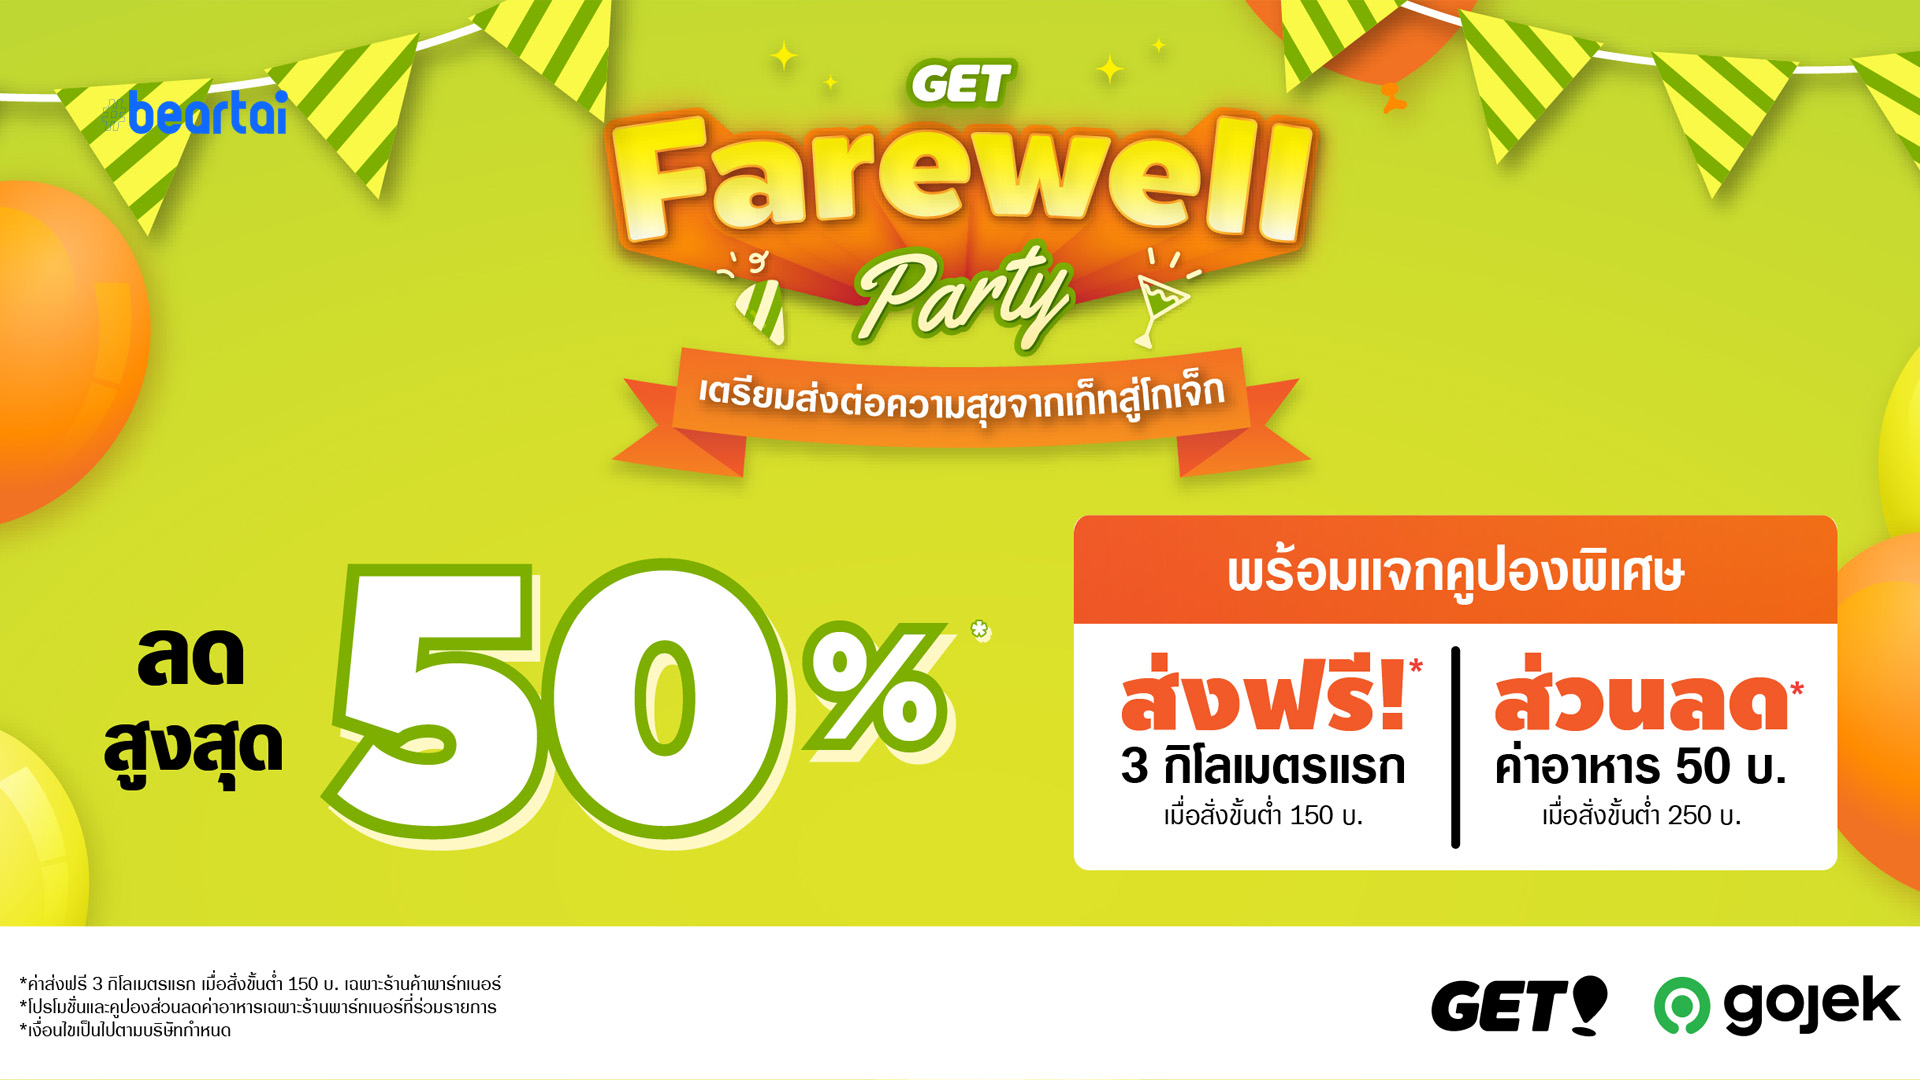 GET เปิดแคมเปญ “GET Farewell Party” ก่อนเปลี่ยนแบรนด์เป็น Gojek ยกขบวนร้านอาหารดังลดสูงสุด 50% แถมโปรค่าส่งฟรี!